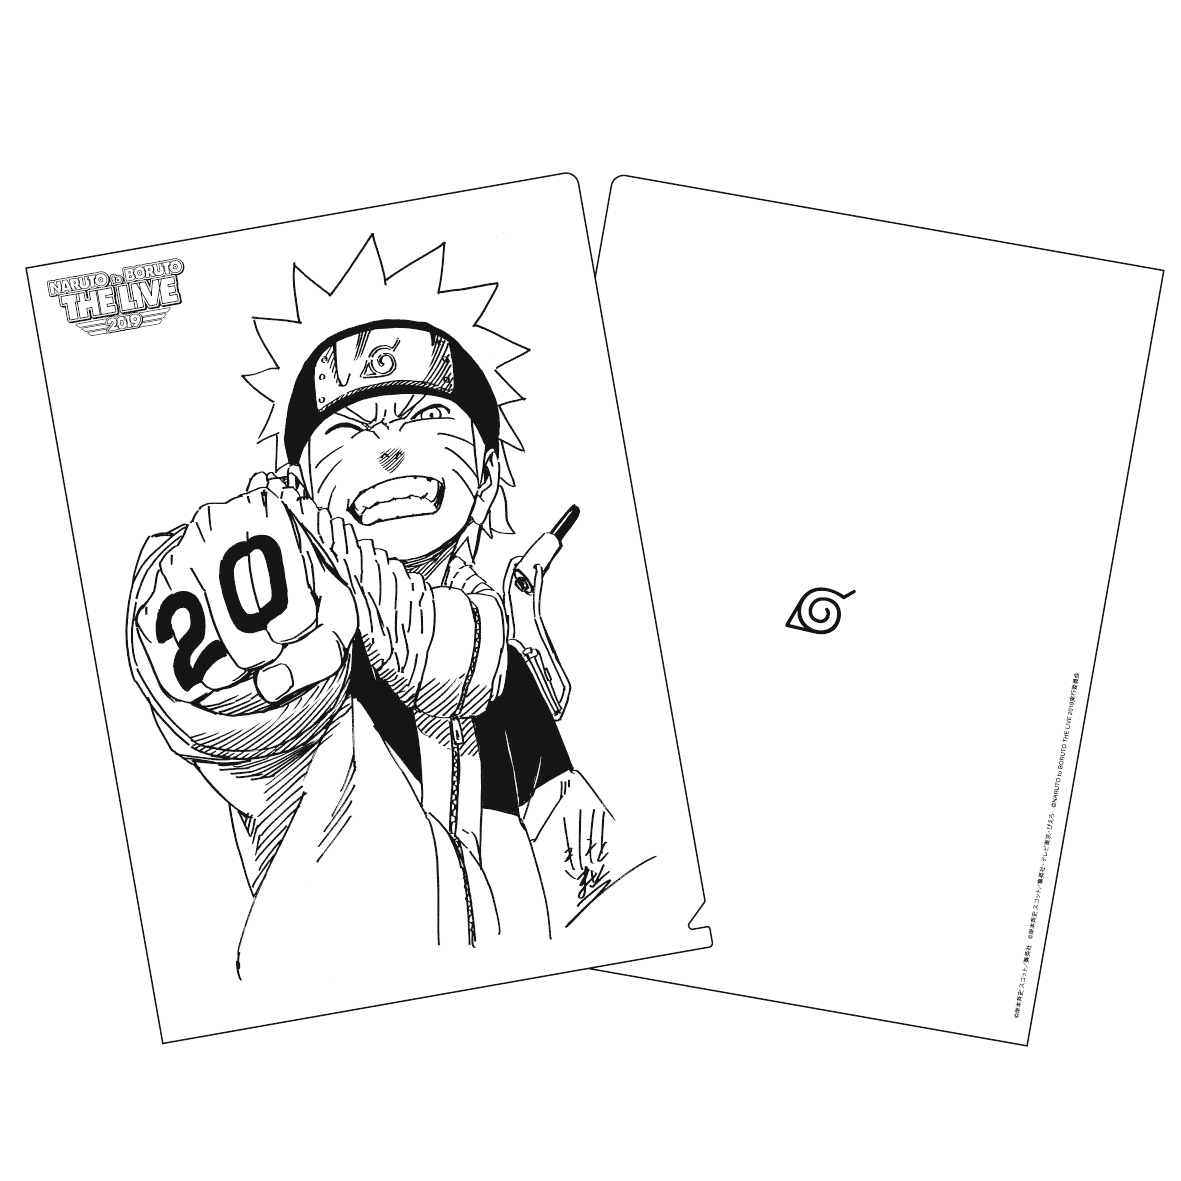 Naruto ナルト 20周年記念 岸本斉史描き下ろしイラストグッズを ナルボルライブ2019 で販売決定 チケットは完売間近 ガジェット通信 Getnews